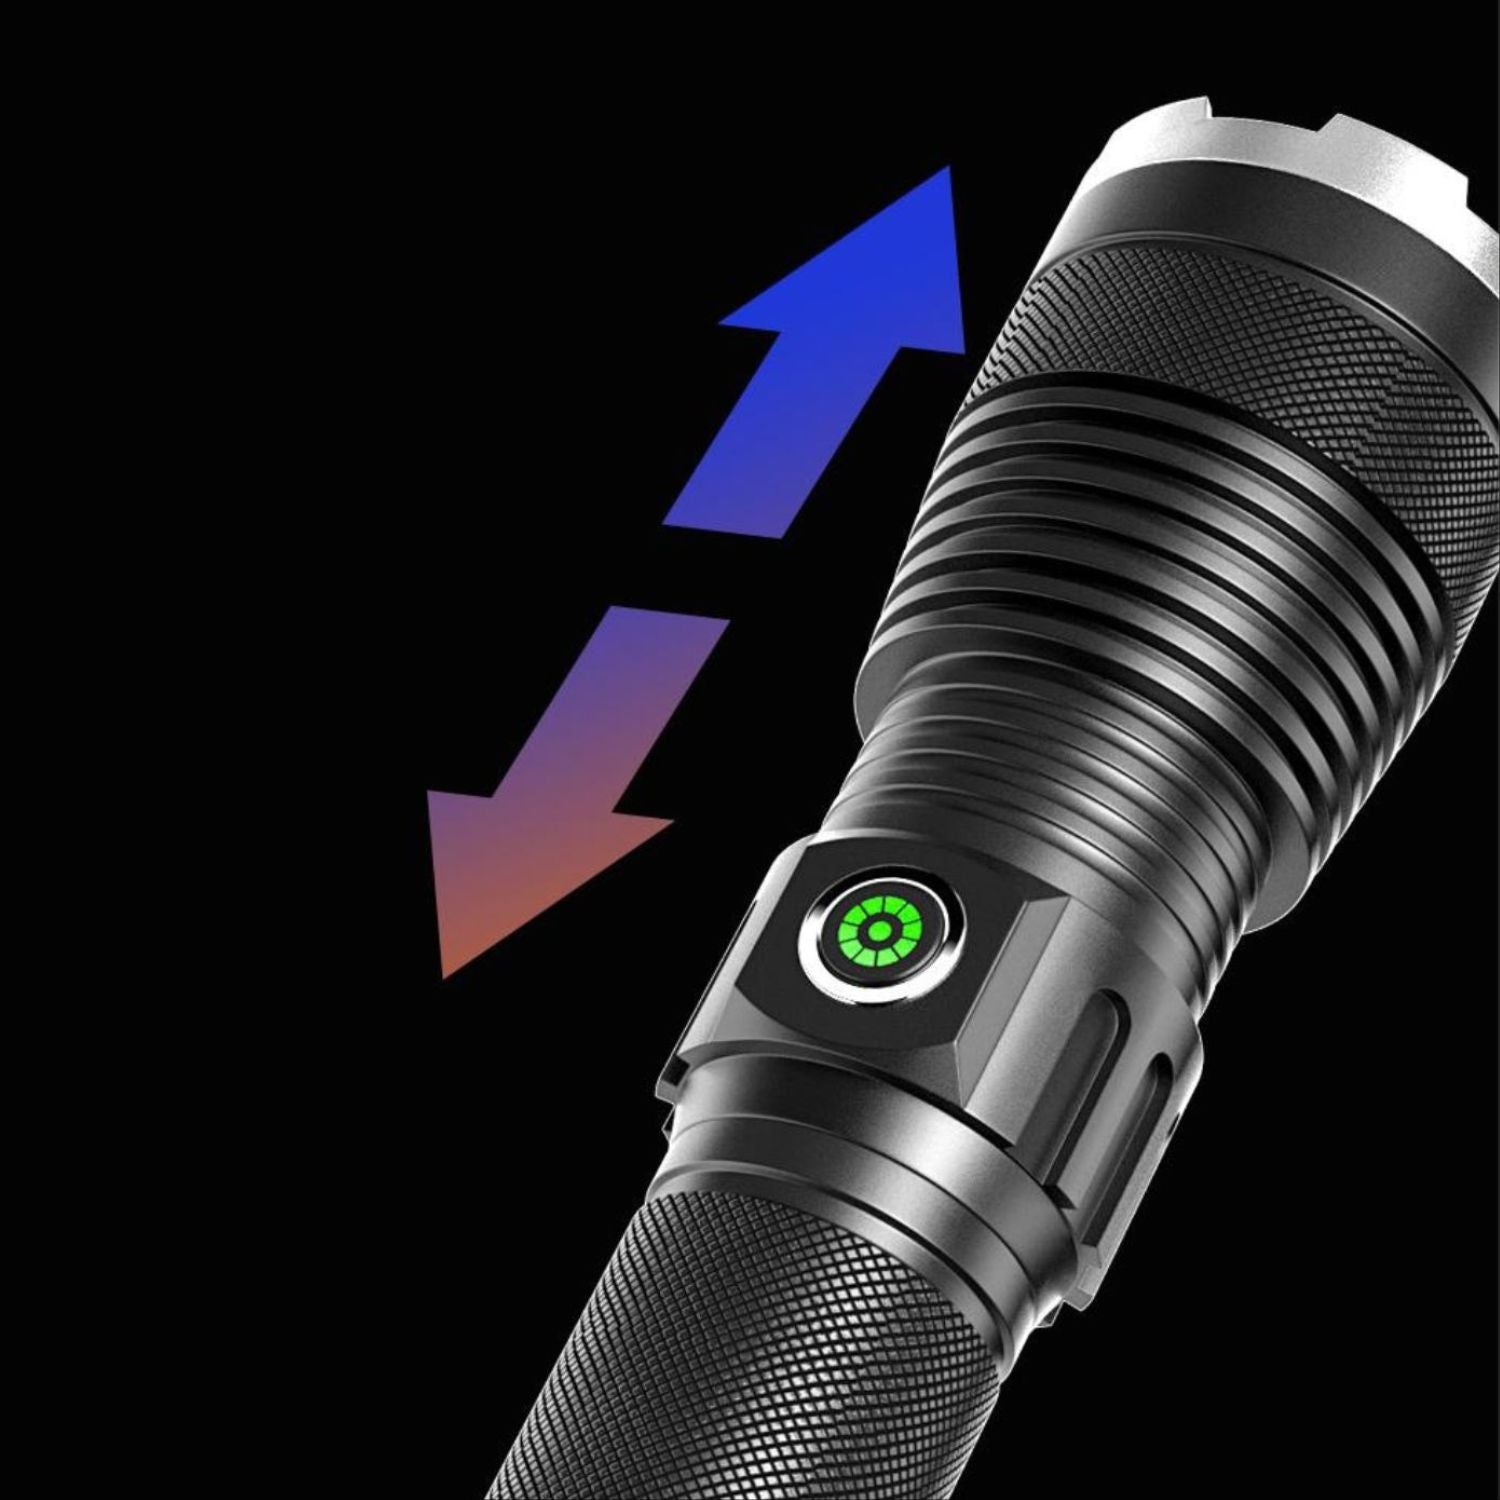 KILIROO Rechargable Flashlight 1200 High Lumens with 5 Modes